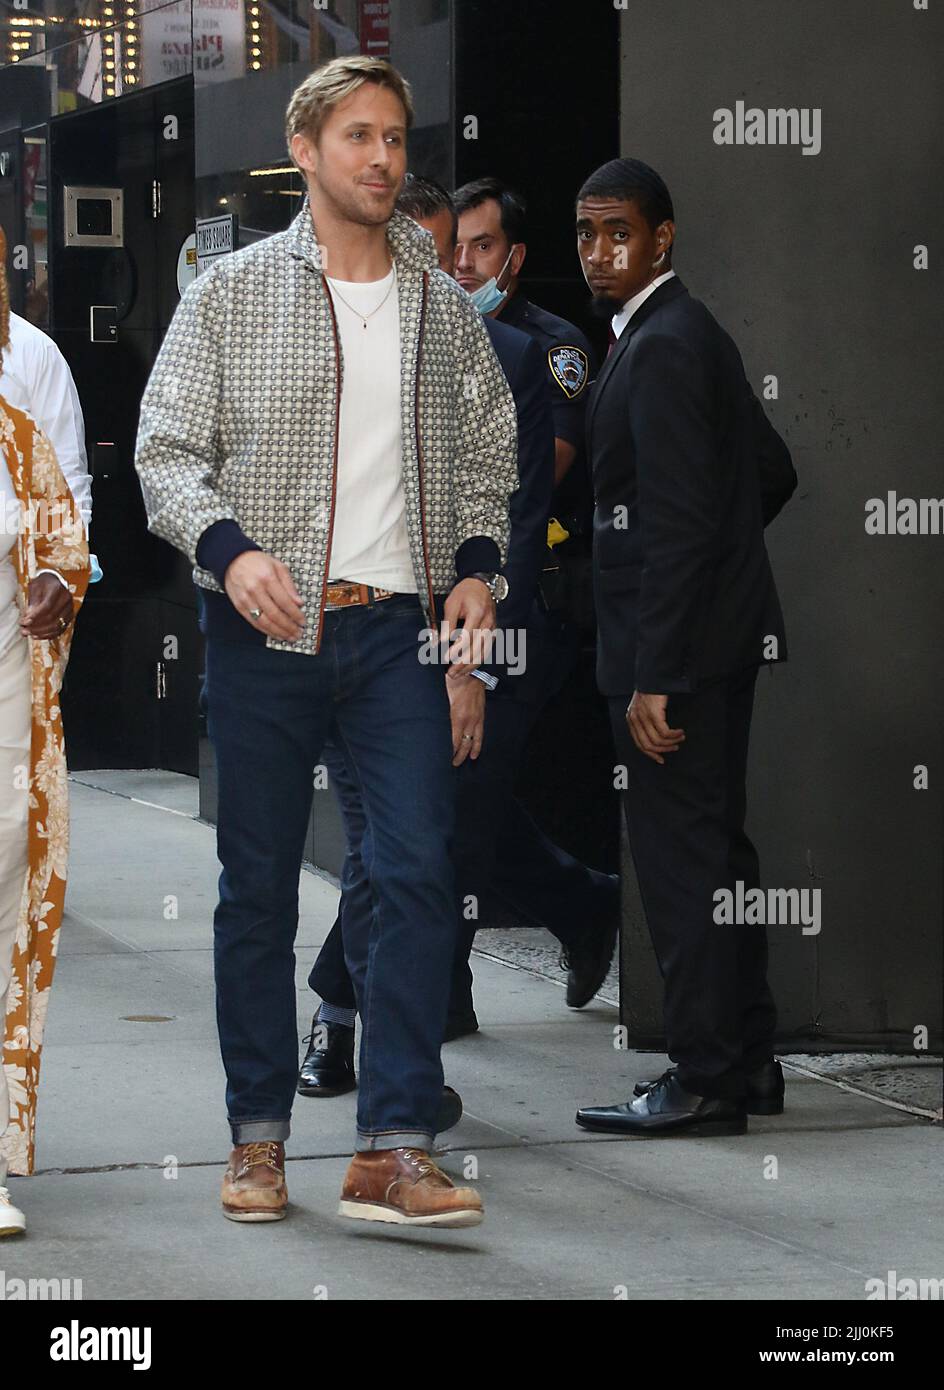 Free Photo:Ryan Gosling in The Gray Man (2022)